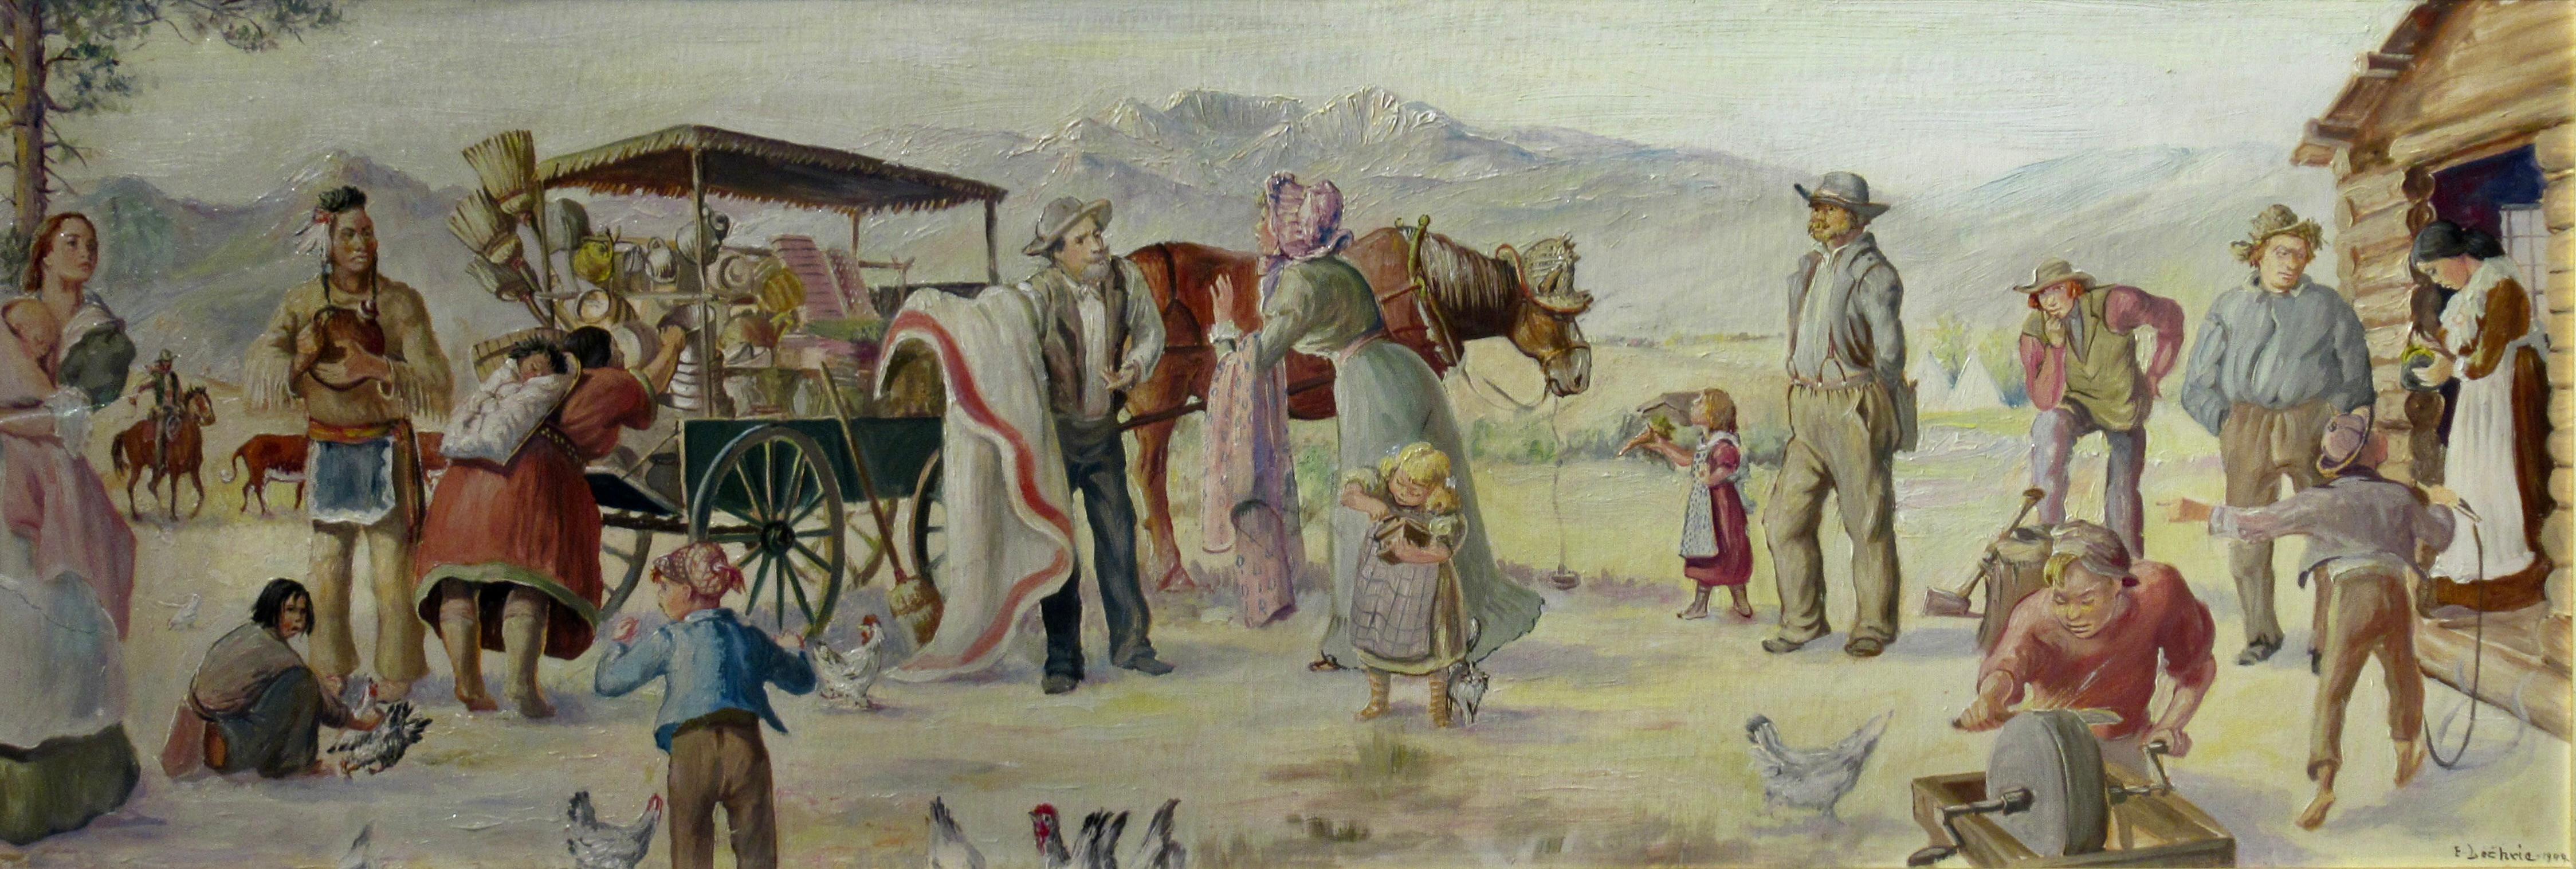 The Peddler - Painting by Elizabeth Lochrie